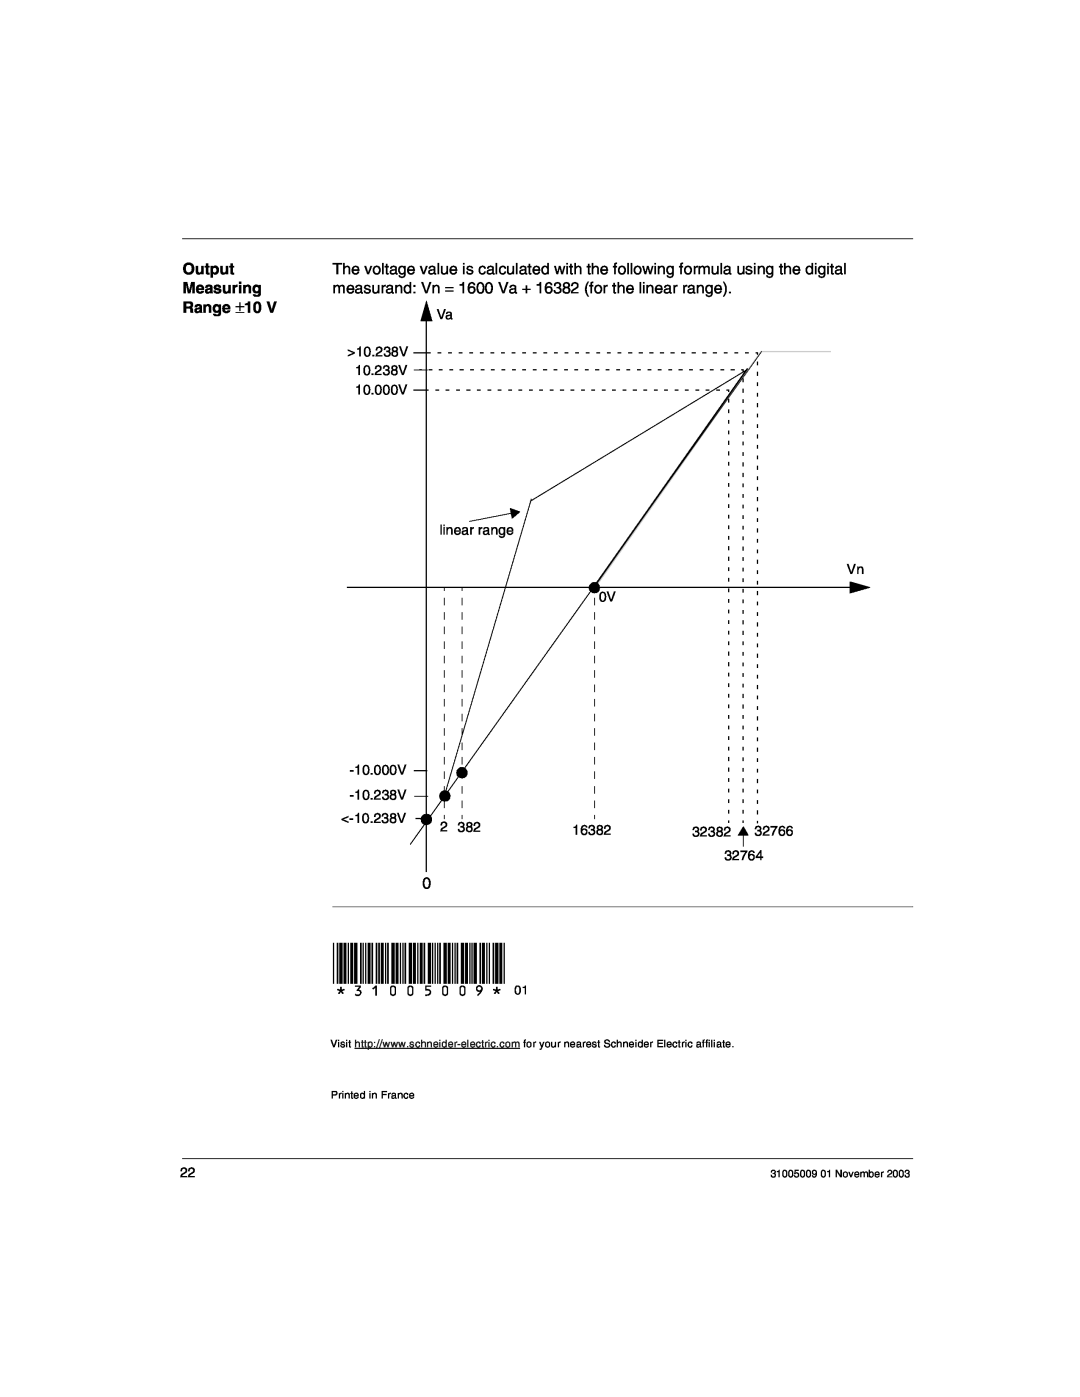 Schneider Electric 170AMM11030 manual Output Measuring Range ±10, 31005009 